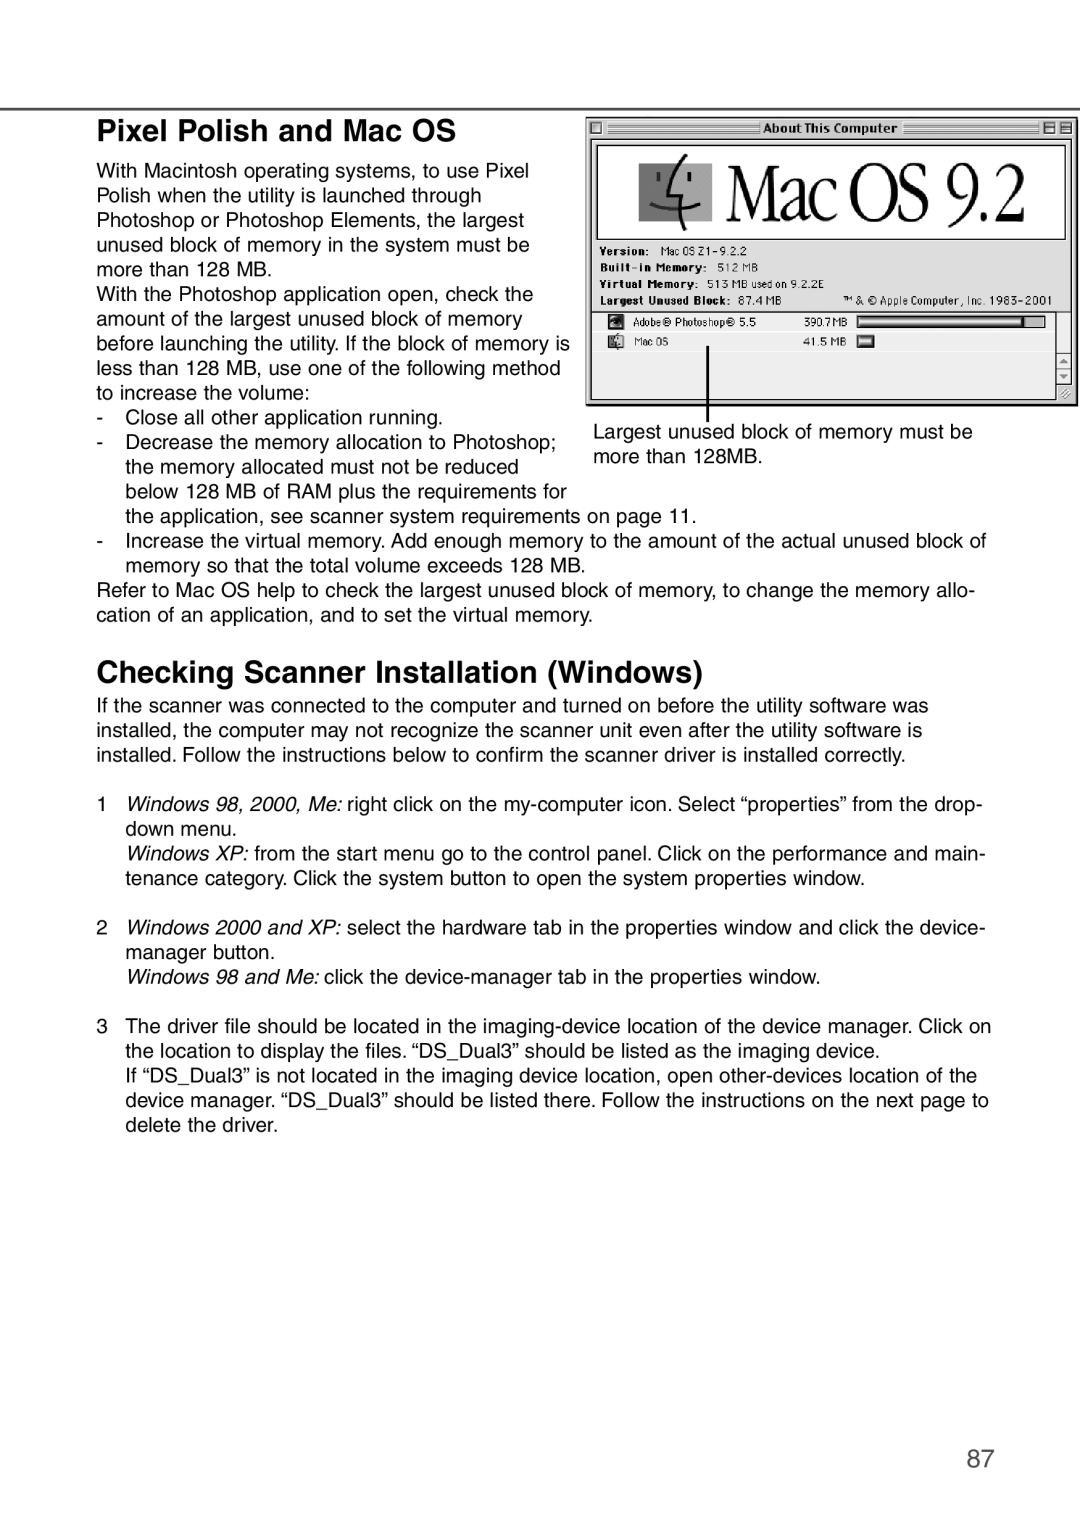 Konica Minolta AF-2840 instruction manual Pixel Polish and Mac OS, Checking Scanner Installation Windows 